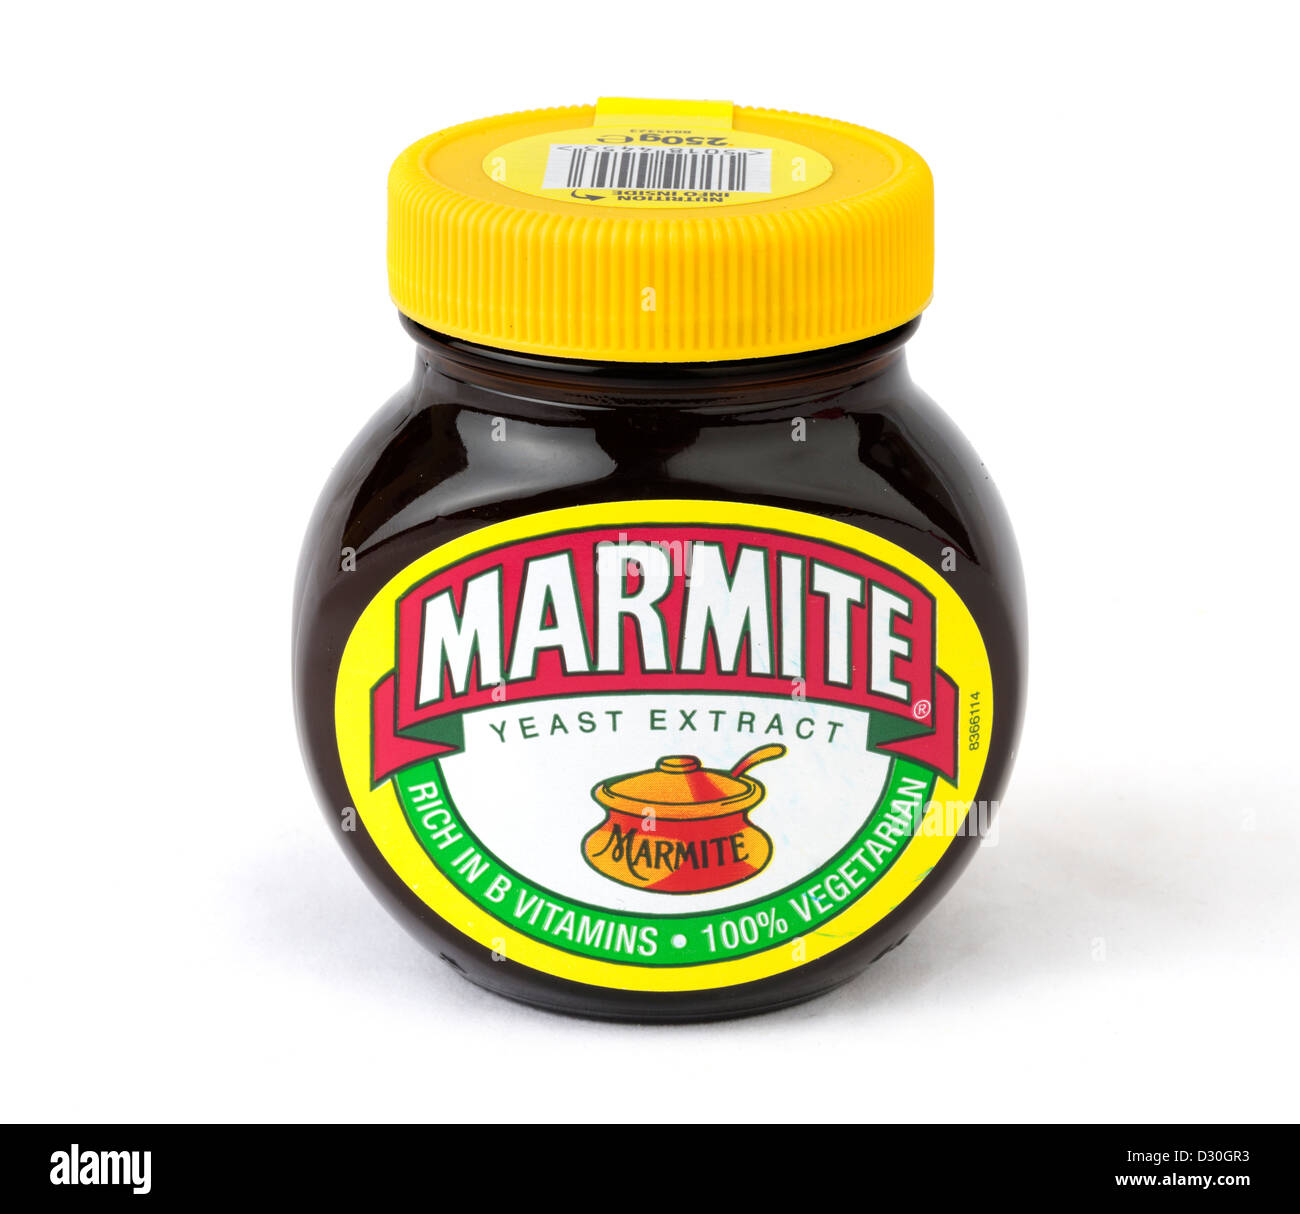 Jar of Marmite spread, UK Stock Photo